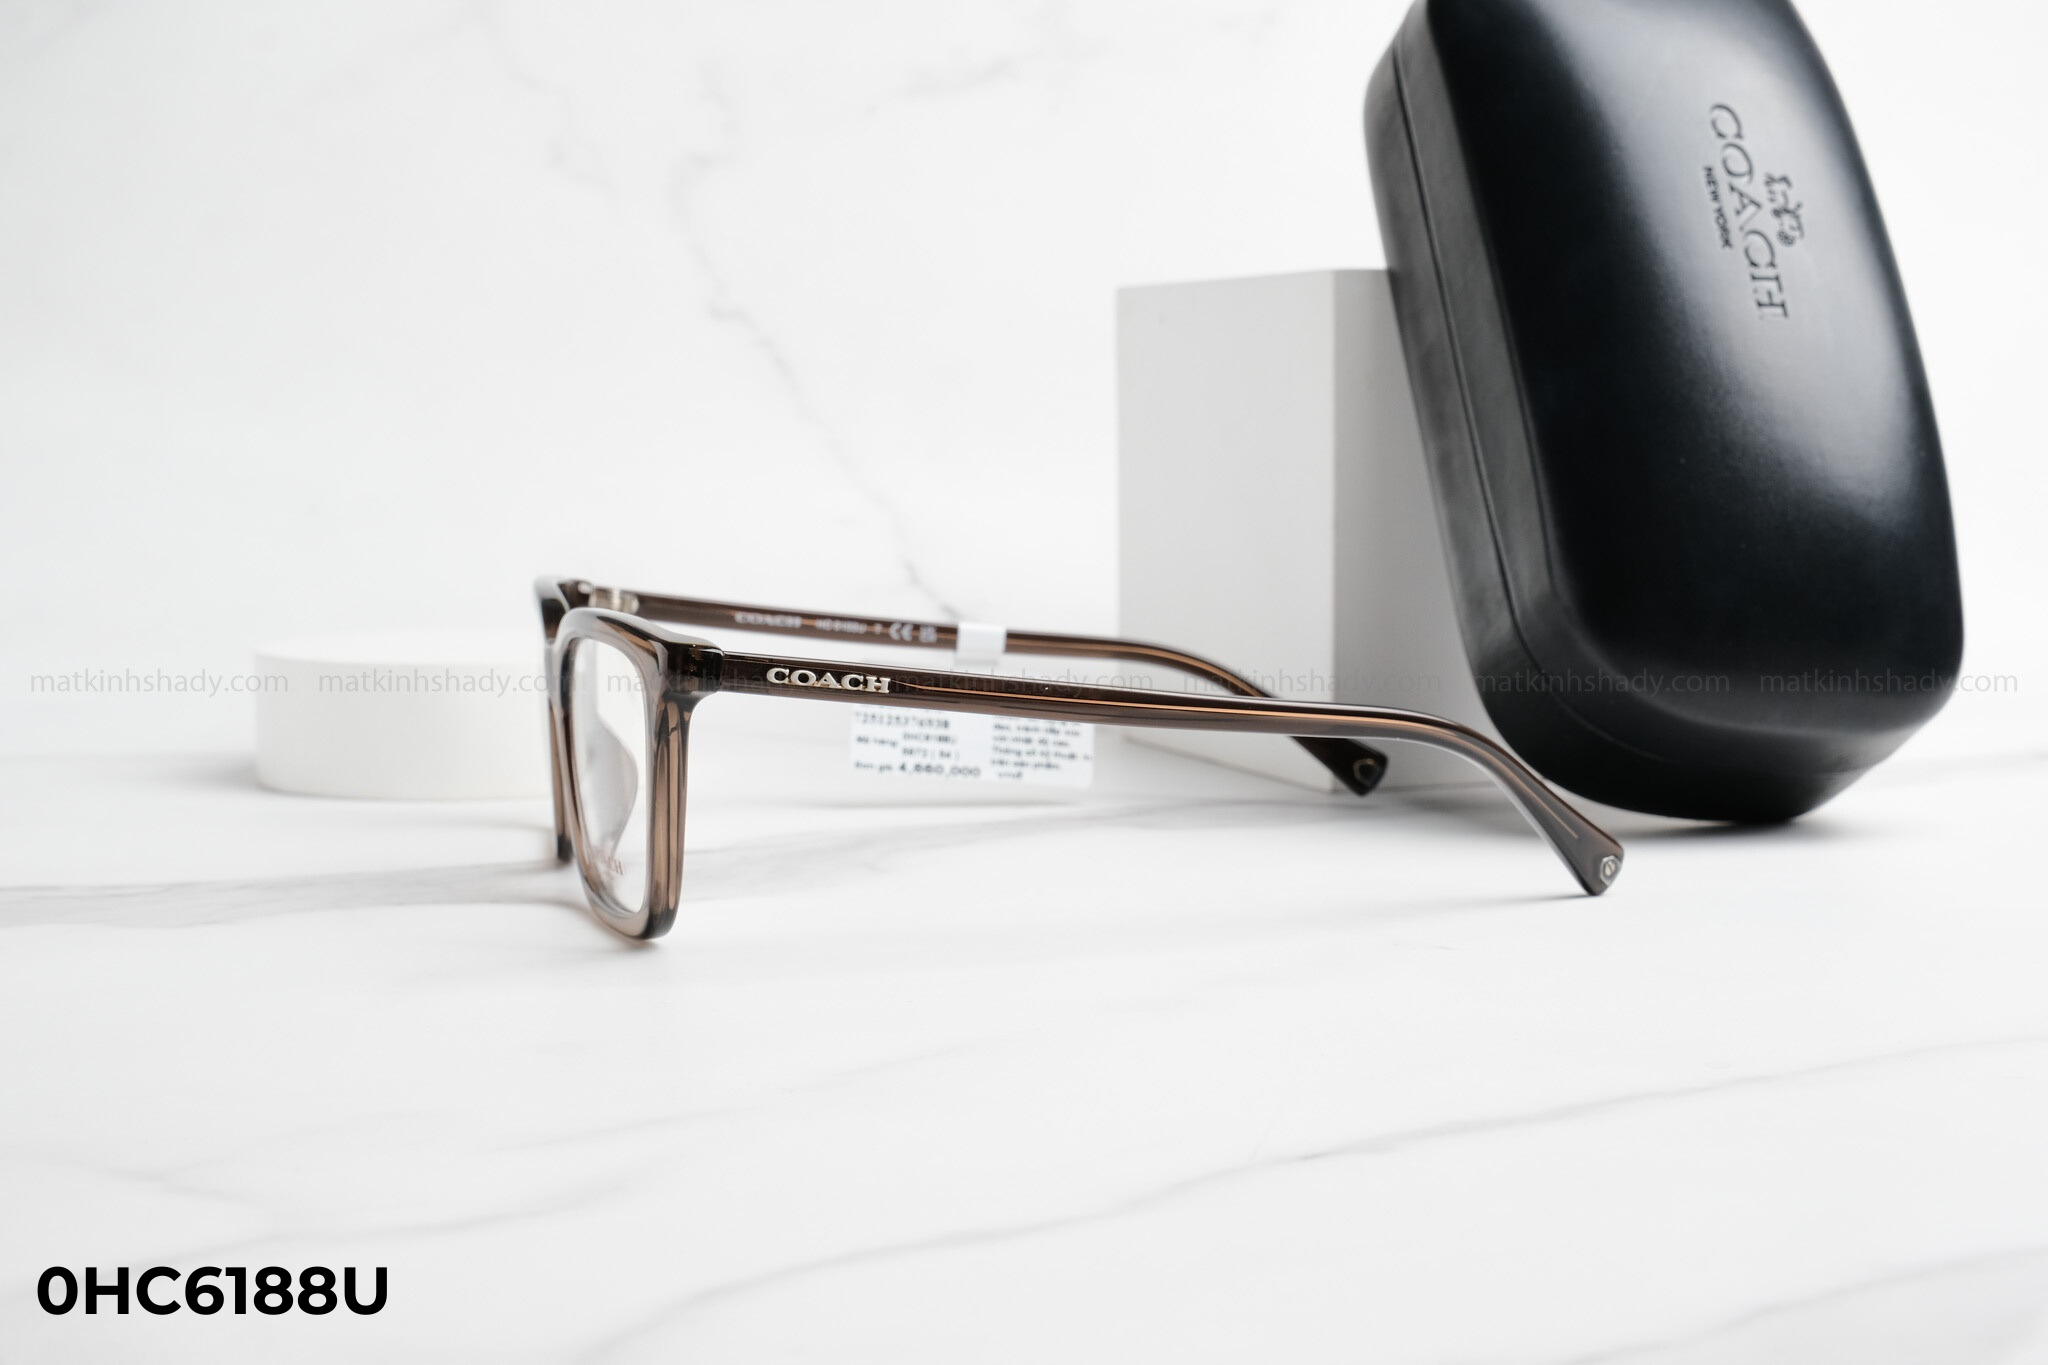  Coach Eyewear - Glasses - 0HC6188U 